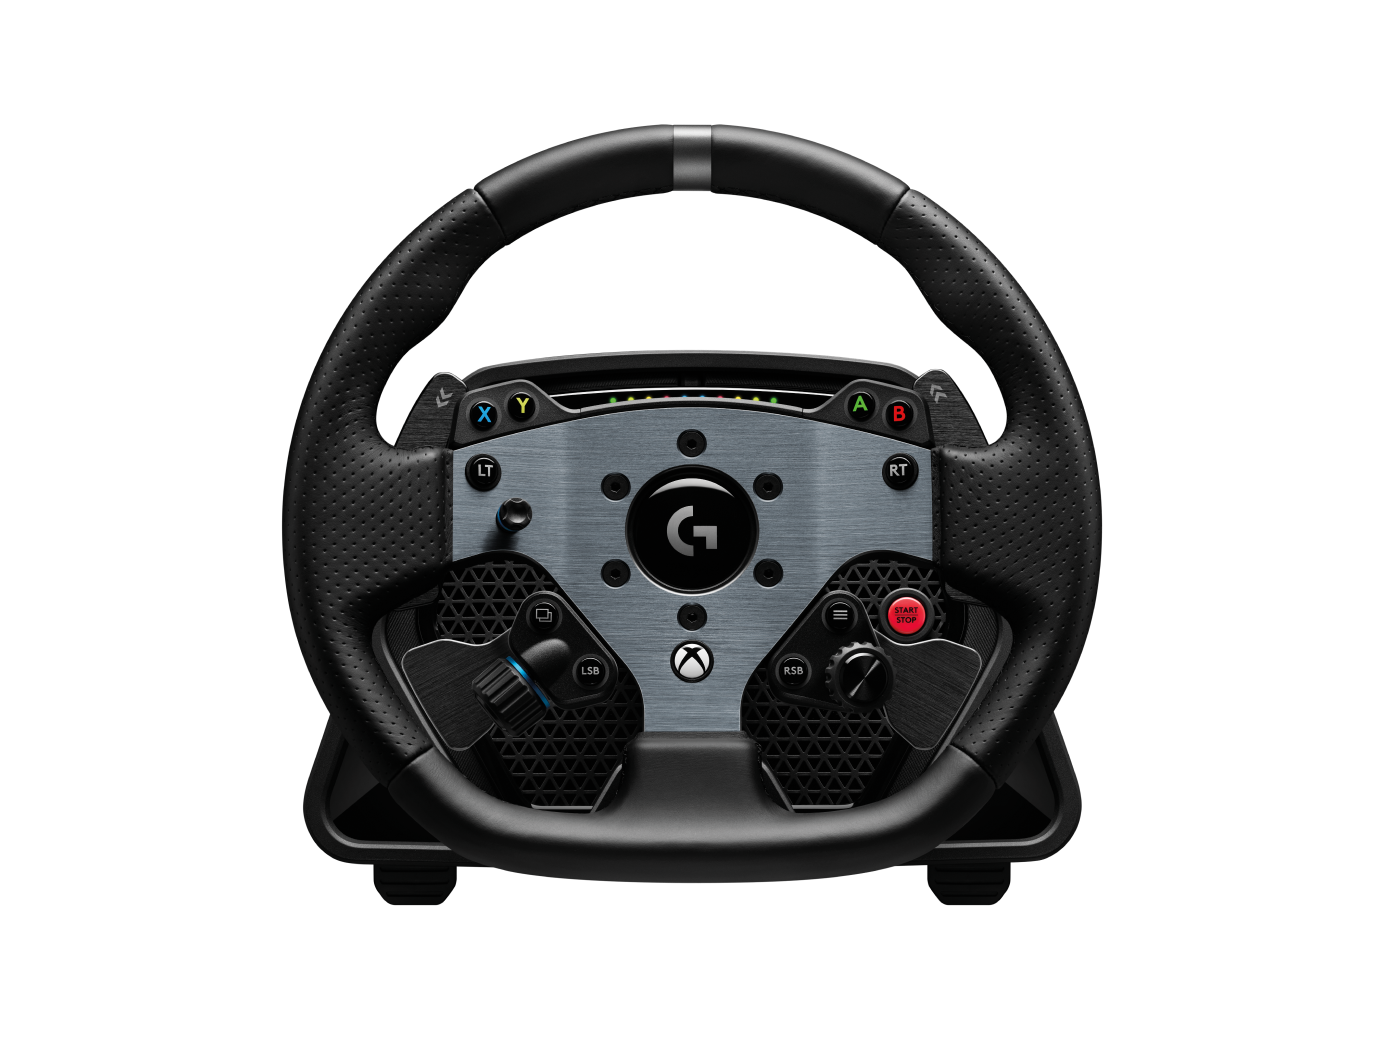 Omgekeerde Datum condensor PRO Racing Wheel for Playstation, Xbox, PC | Logitech G